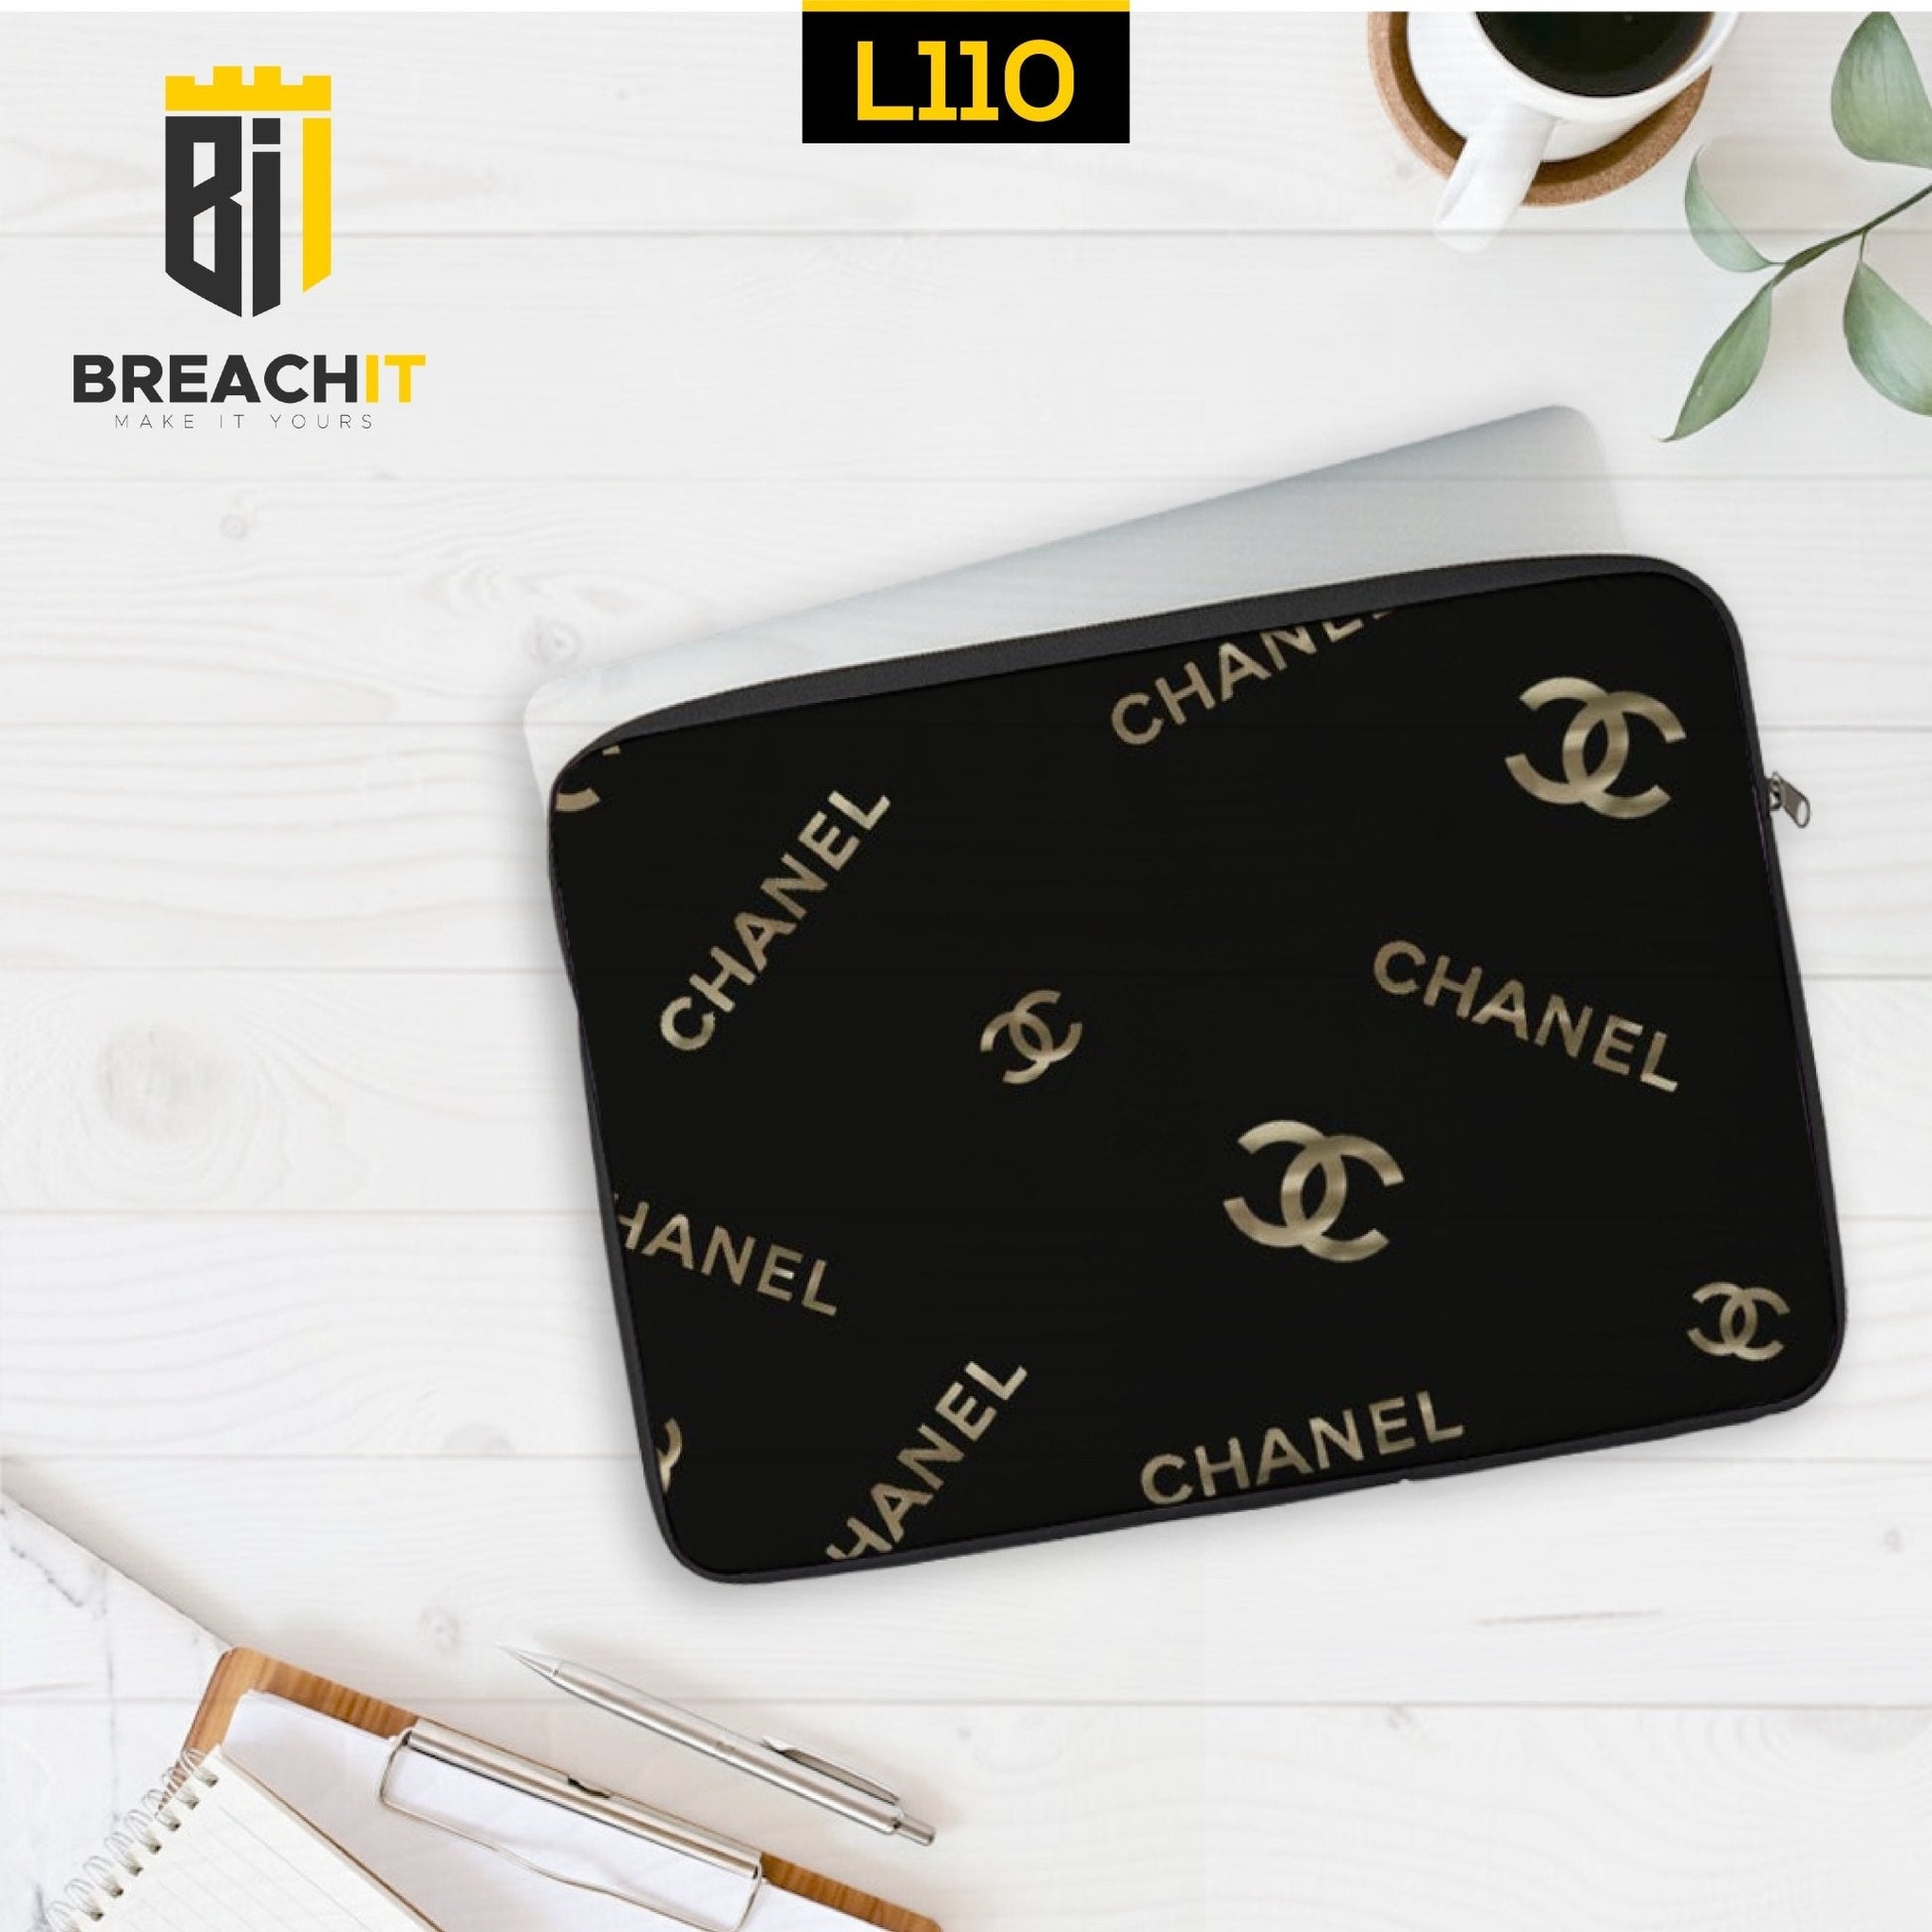 L110 Chanel Laptop Sleeve - BREACHIT